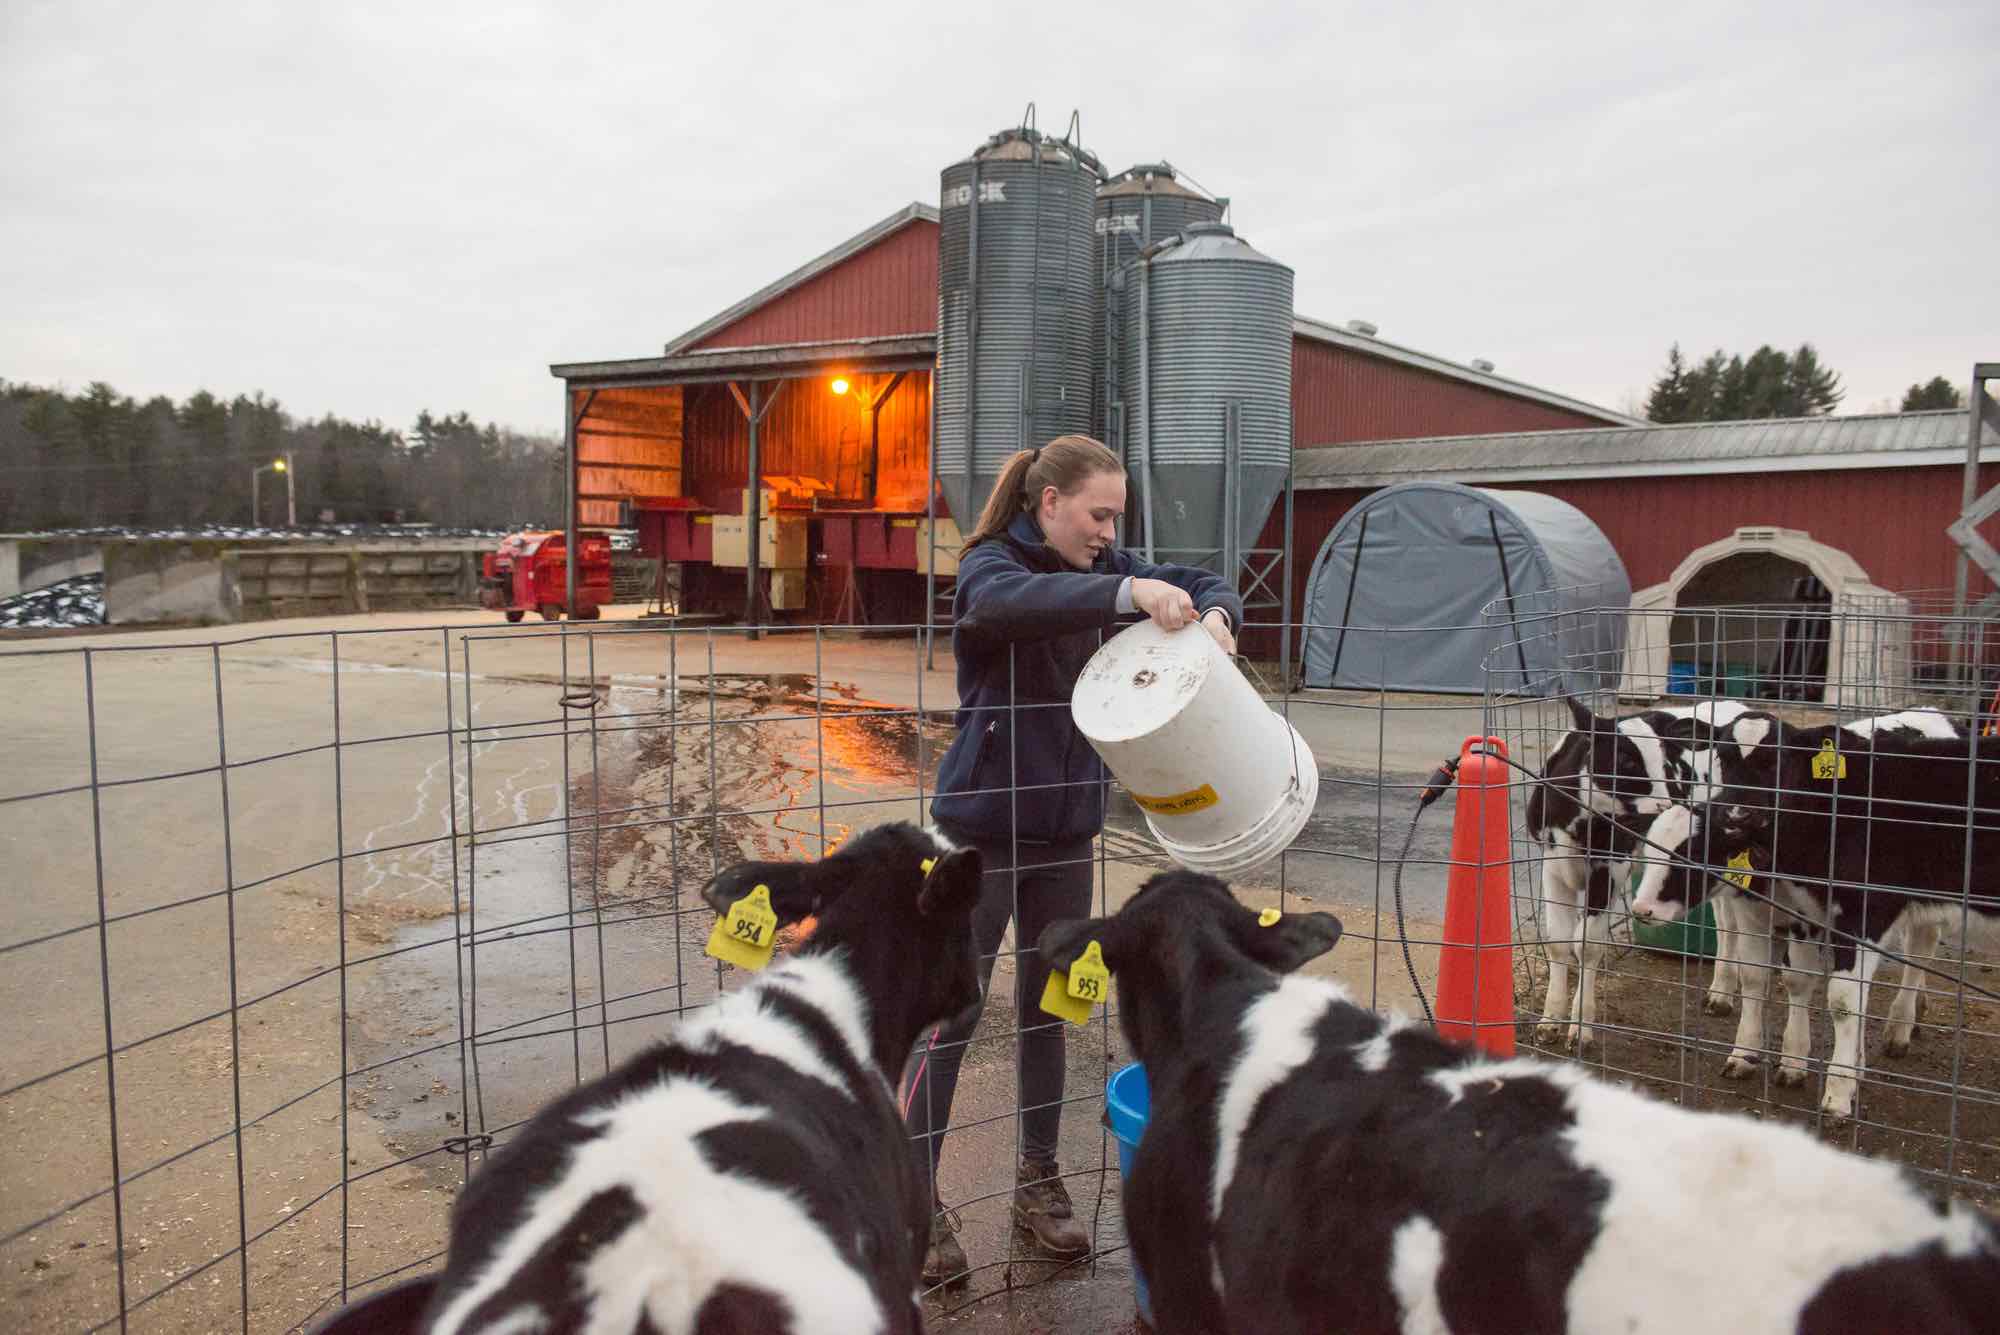 A member of CREAM feeding calves at the Fairchild Dairy Research Center